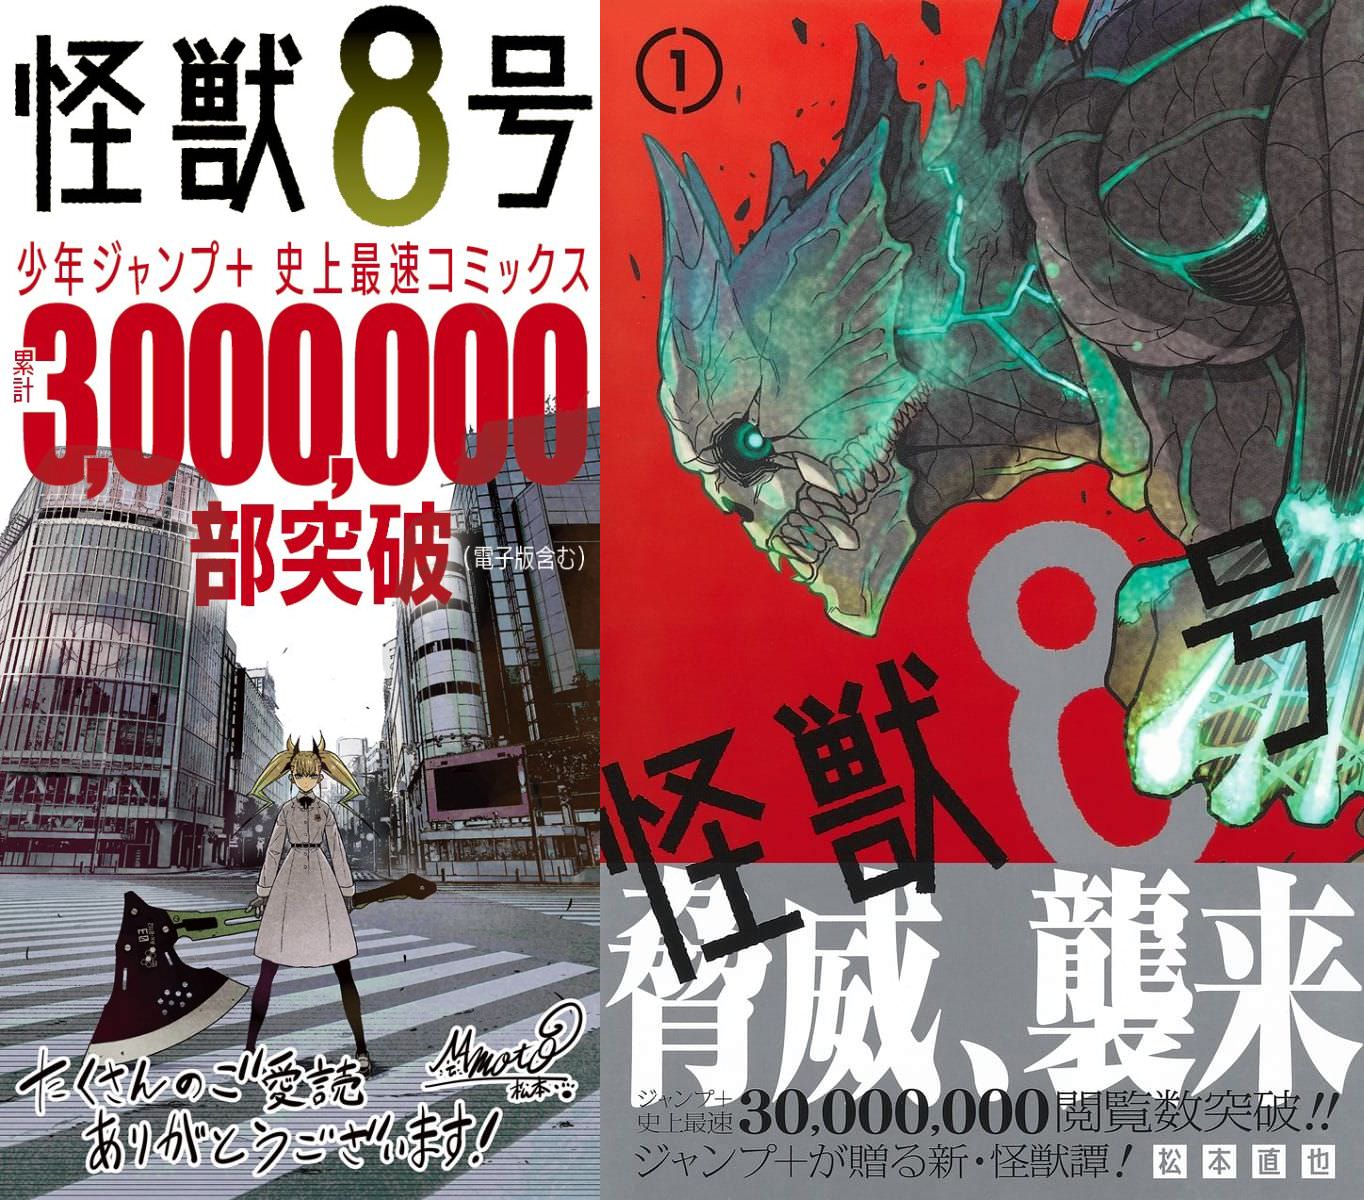 松本直也「怪獣8号」ジャンプ+史上最速で発行部数300万部突破!